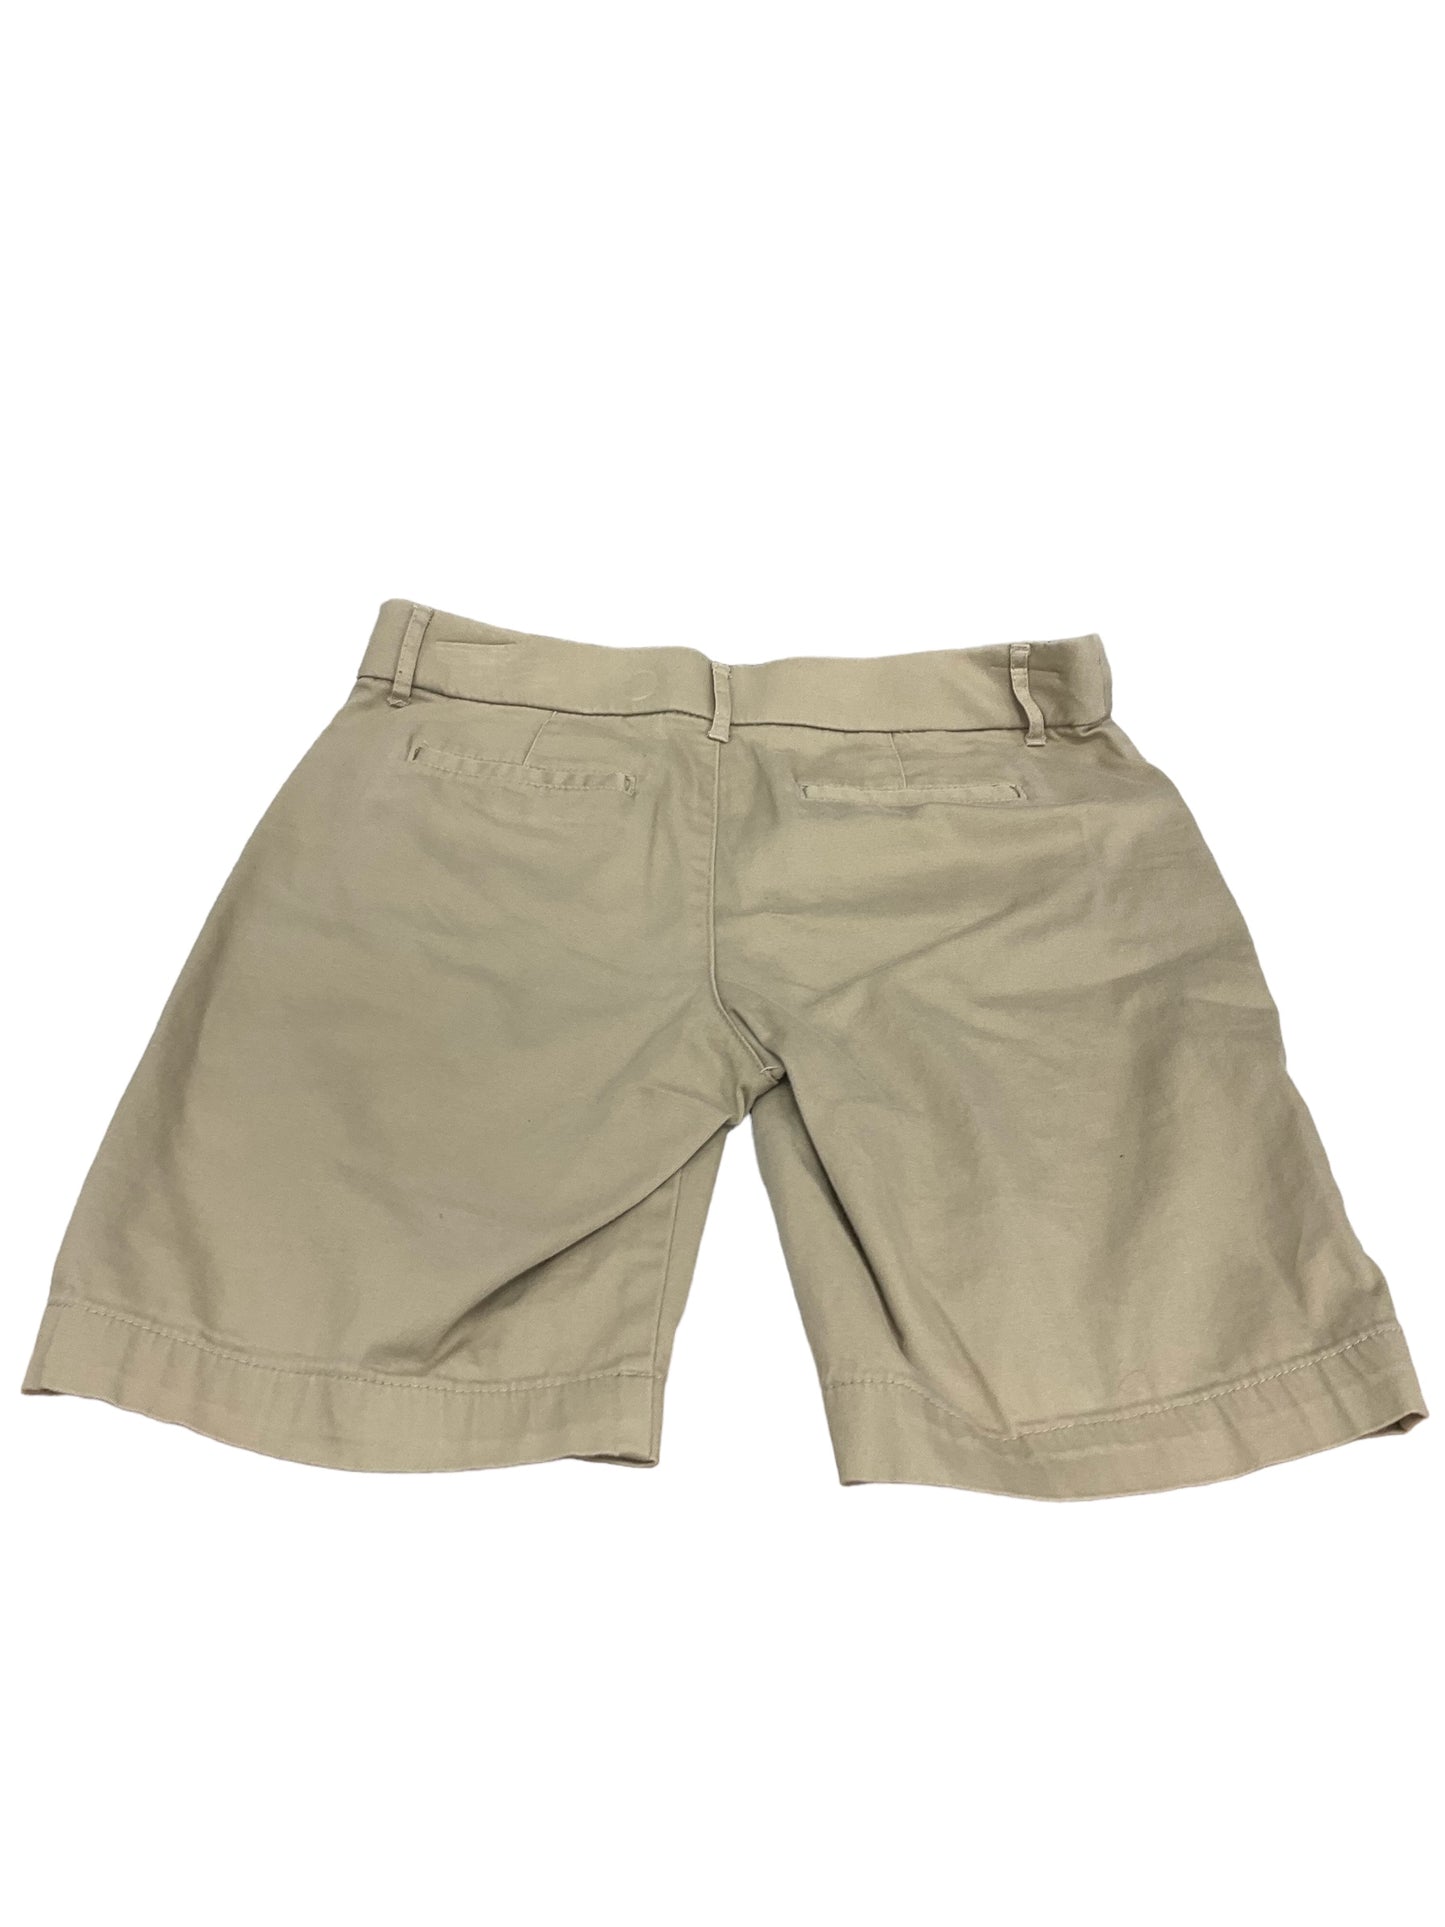 Shorts By St Johns Bay O  Size: 8petite